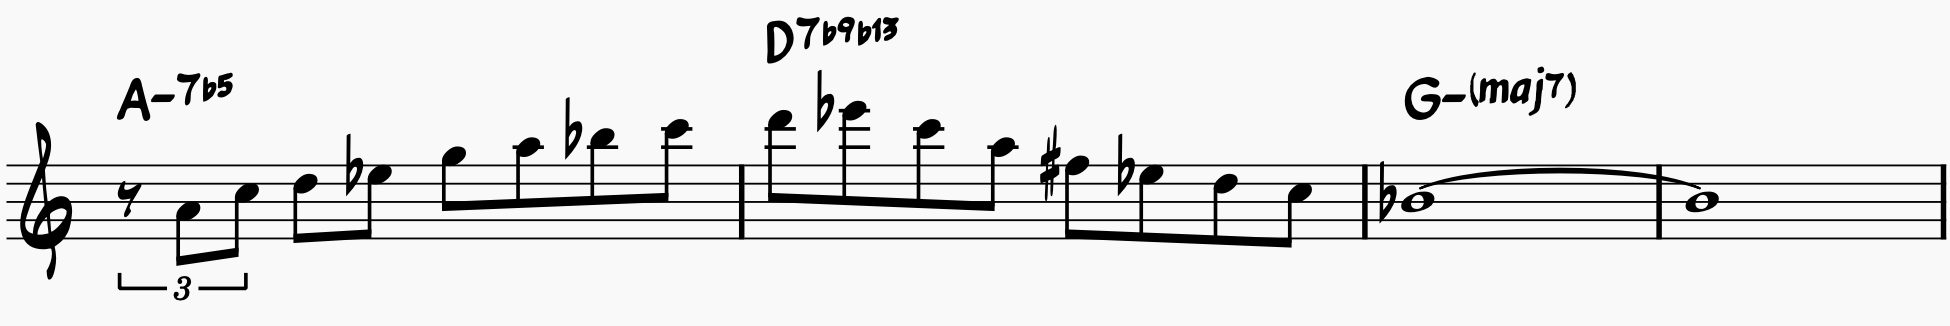 G harmonic minor line over a ii-V in G- 